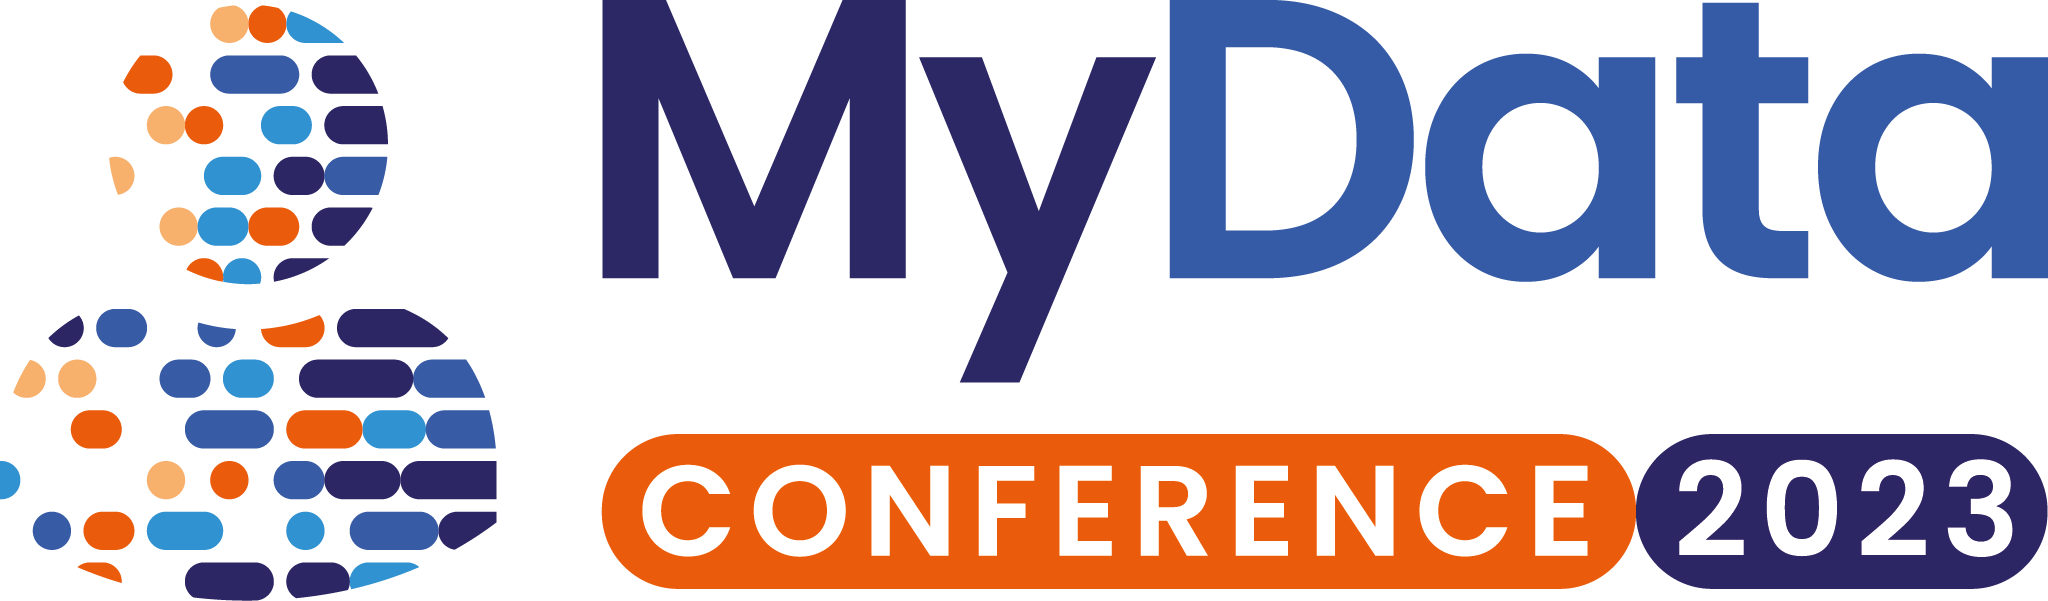 MyData 2023 Conference